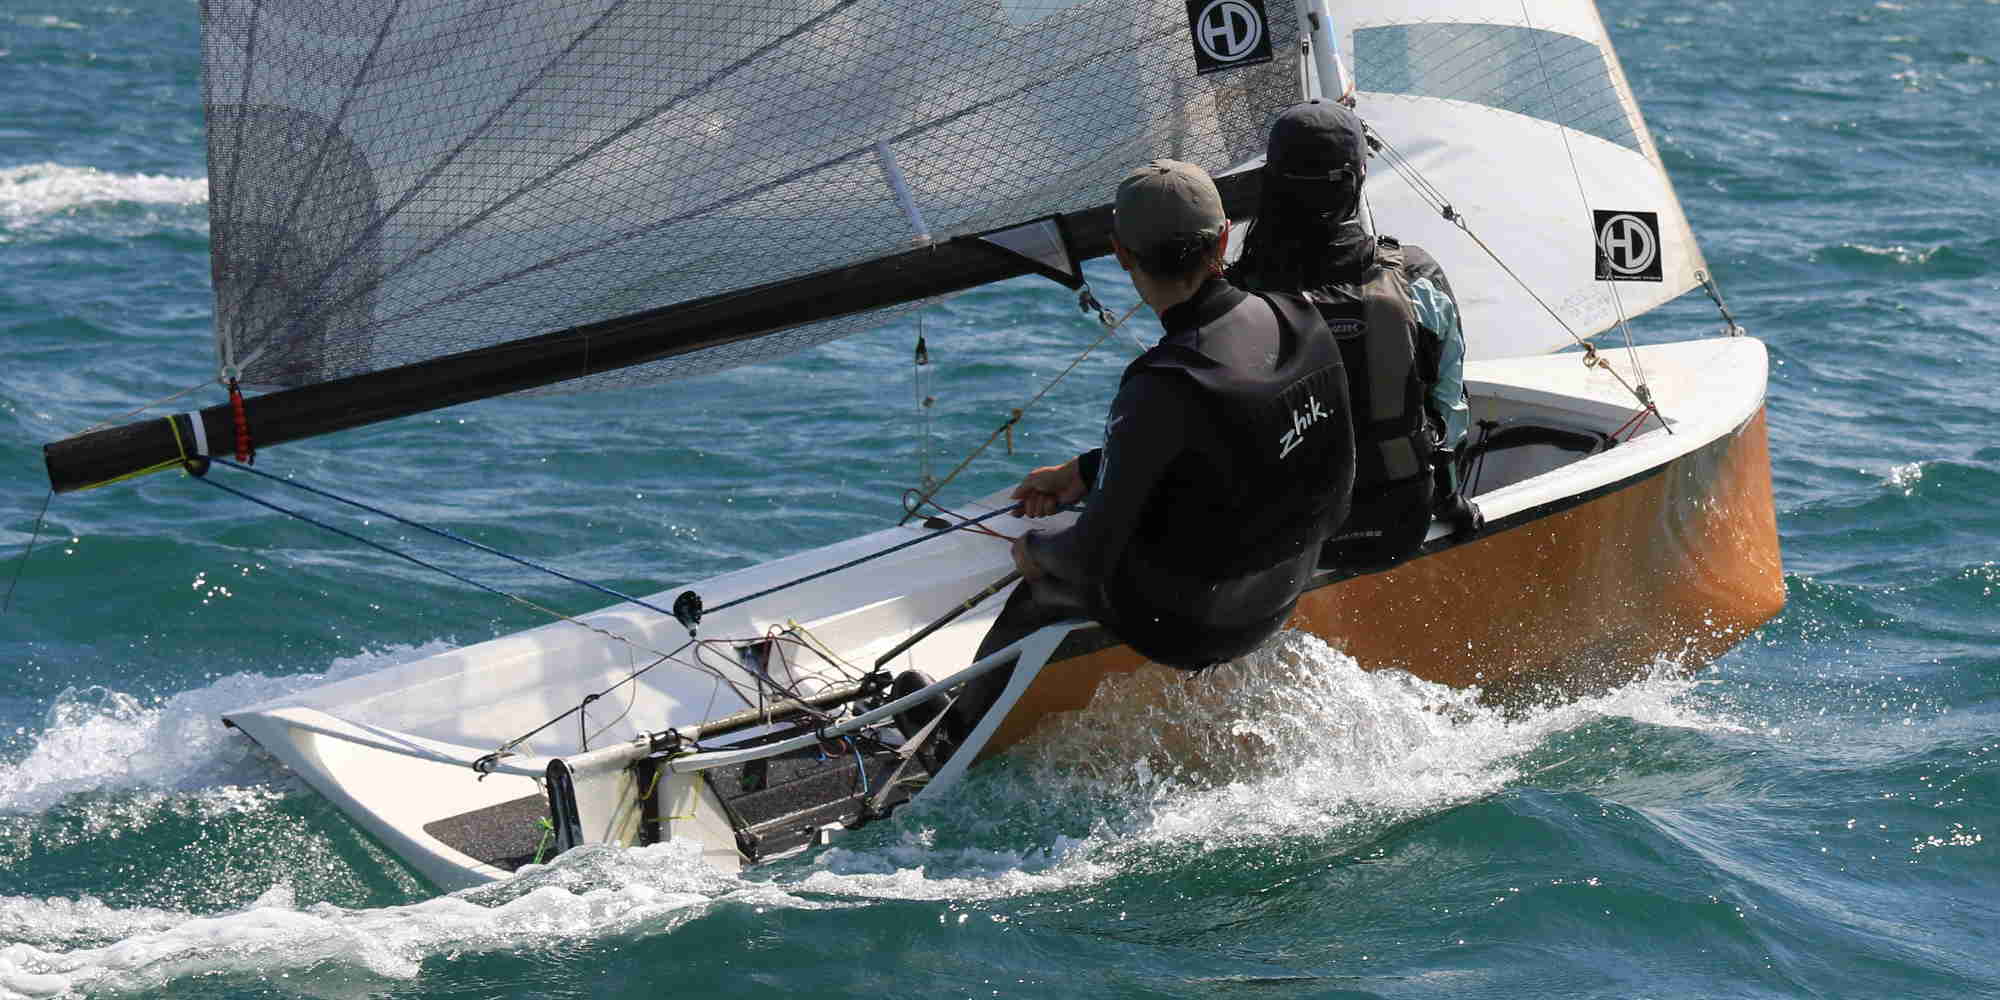 N12 sailing